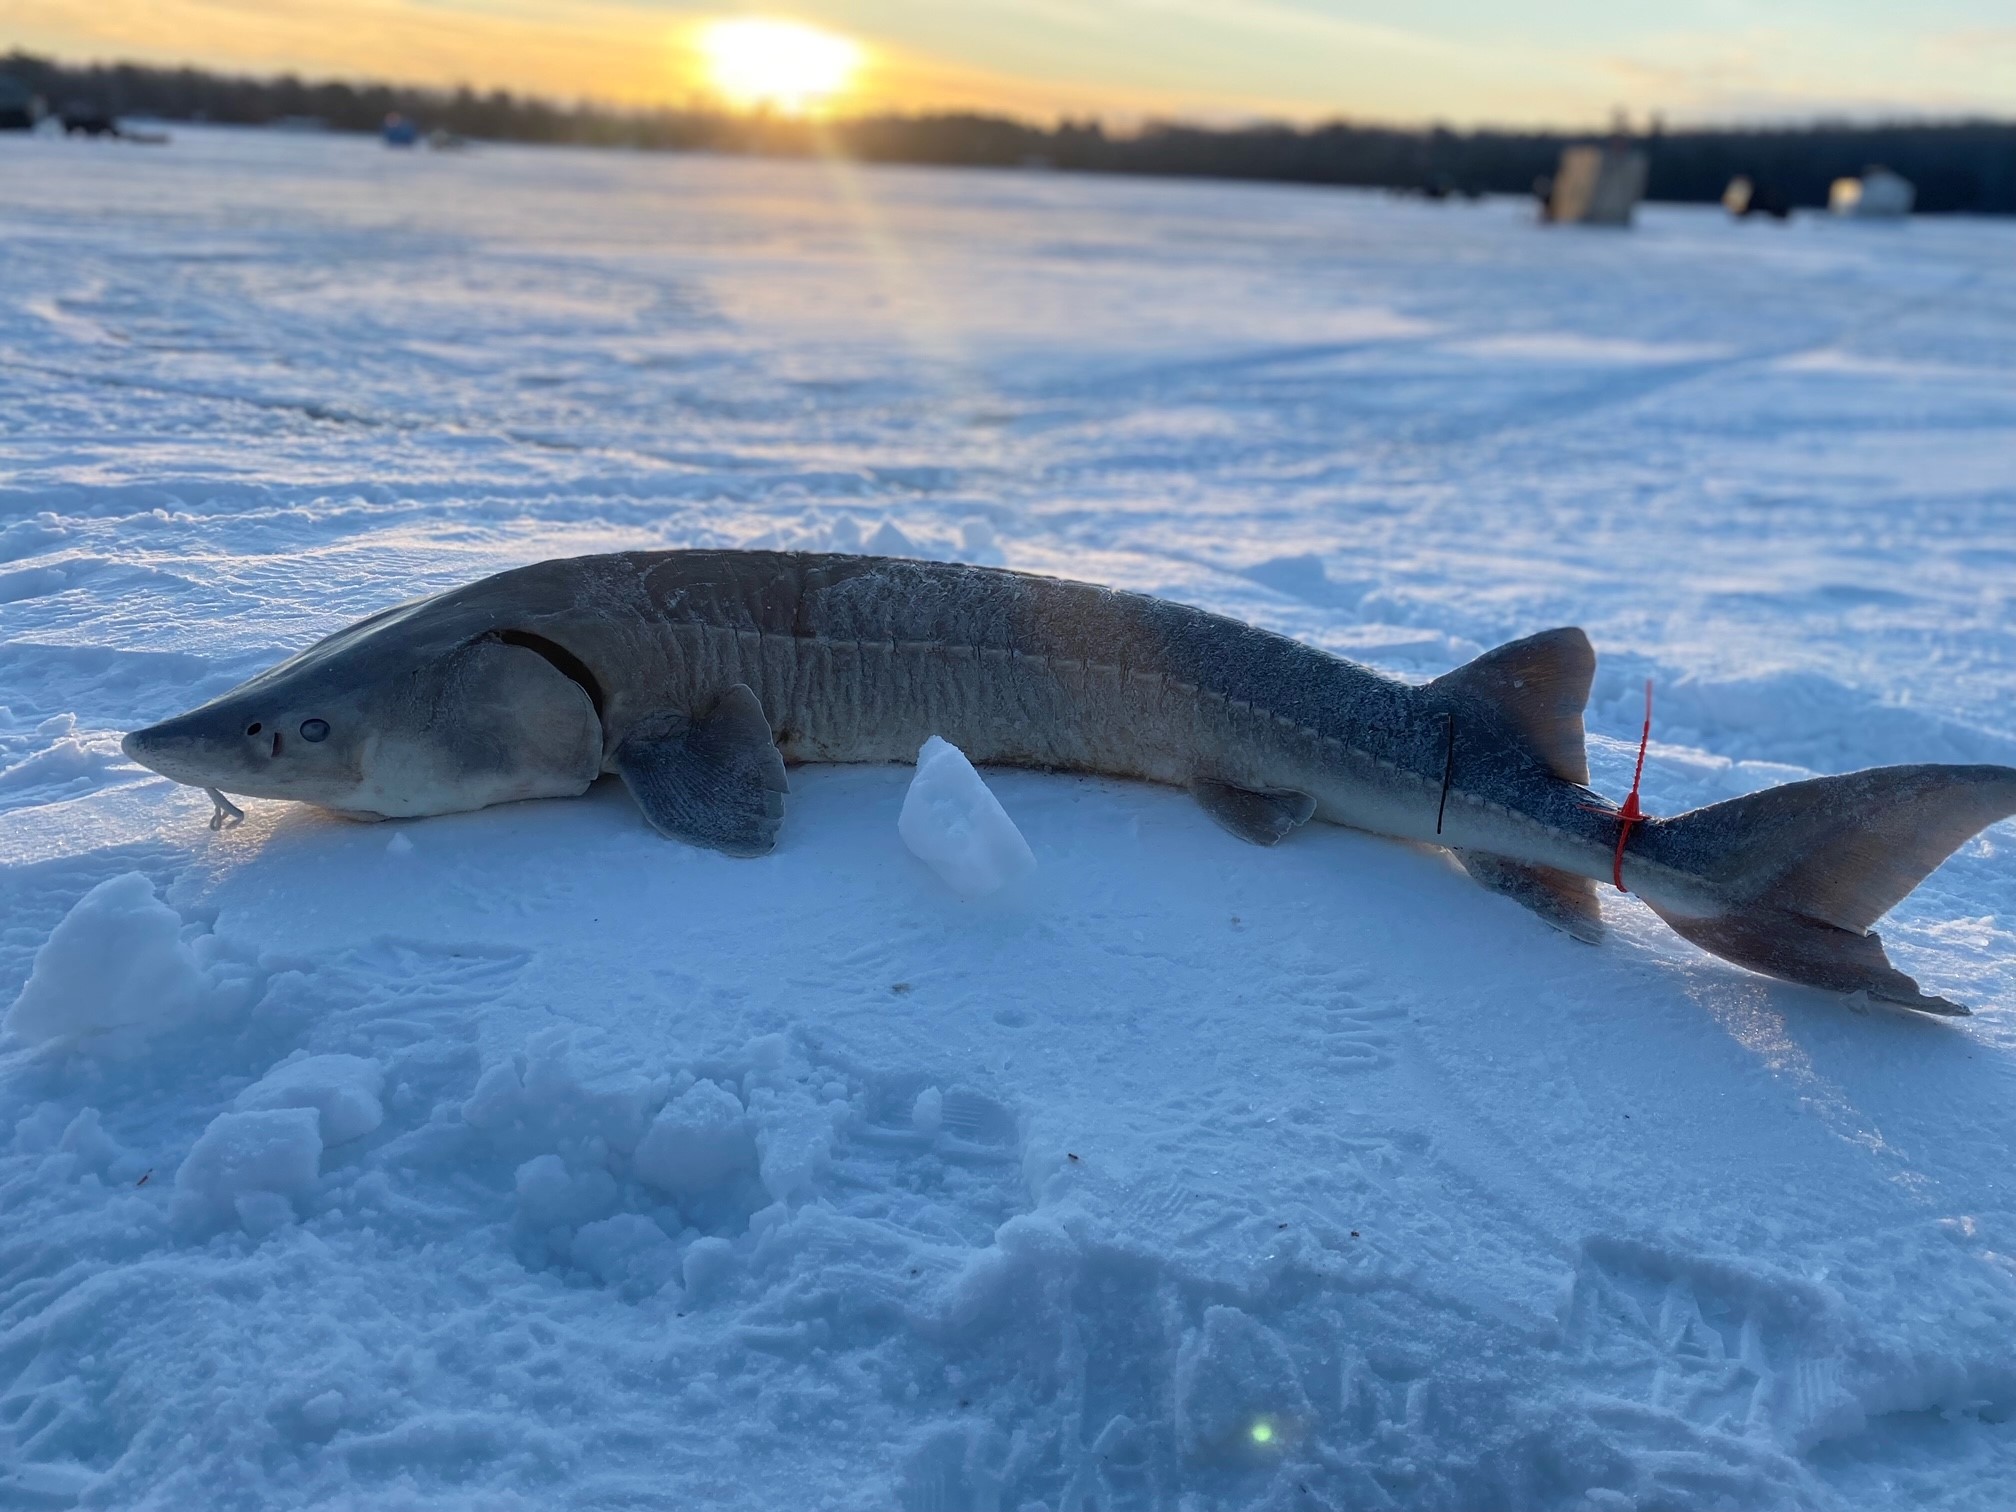 Michigan sturgeon on the ice.